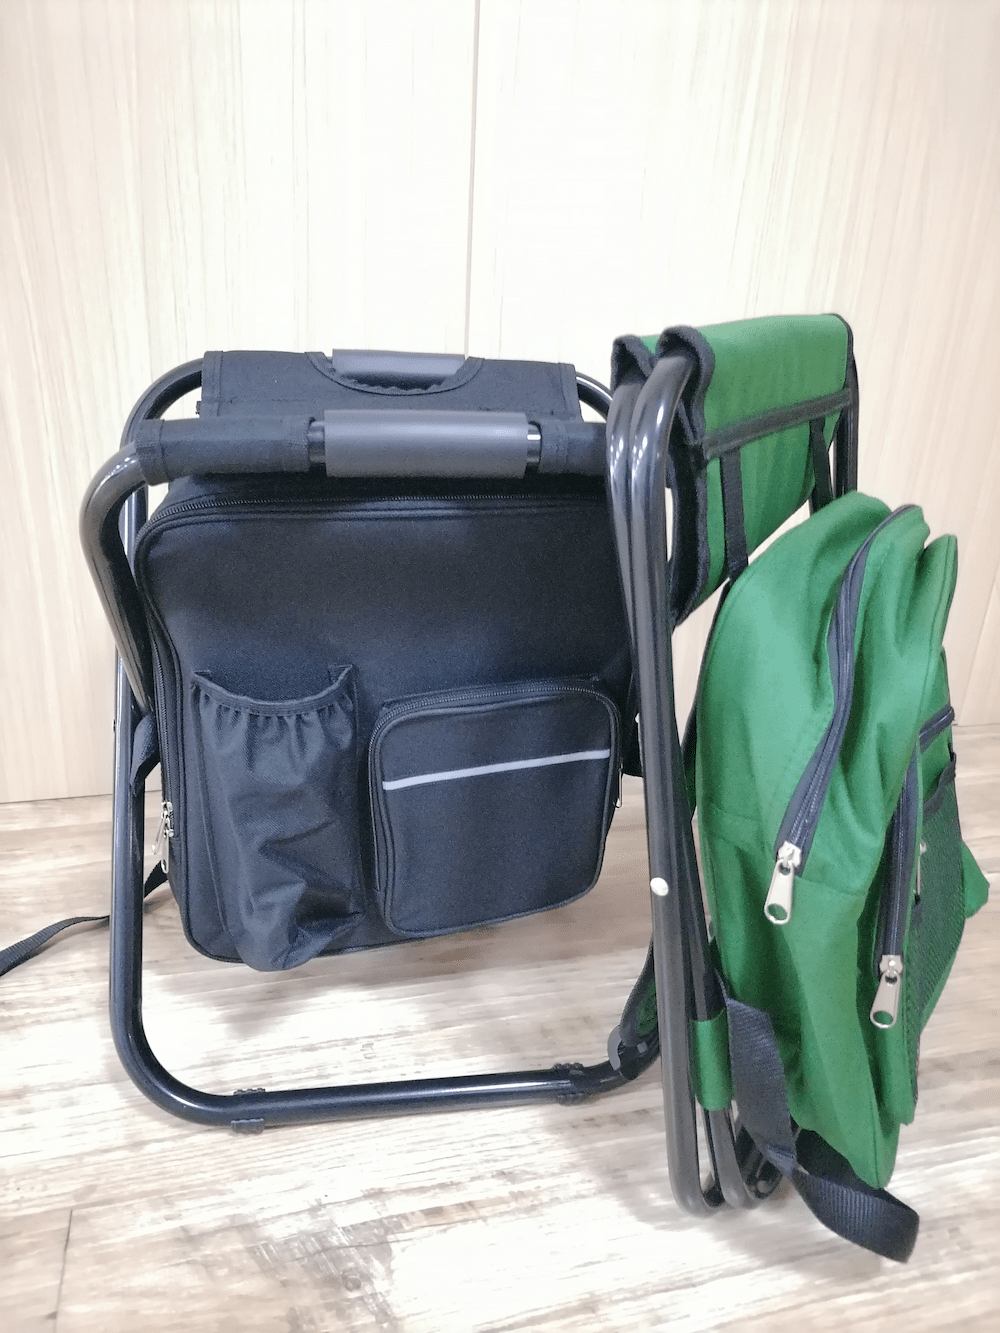 Popular Amazon Folding Backpack Chair